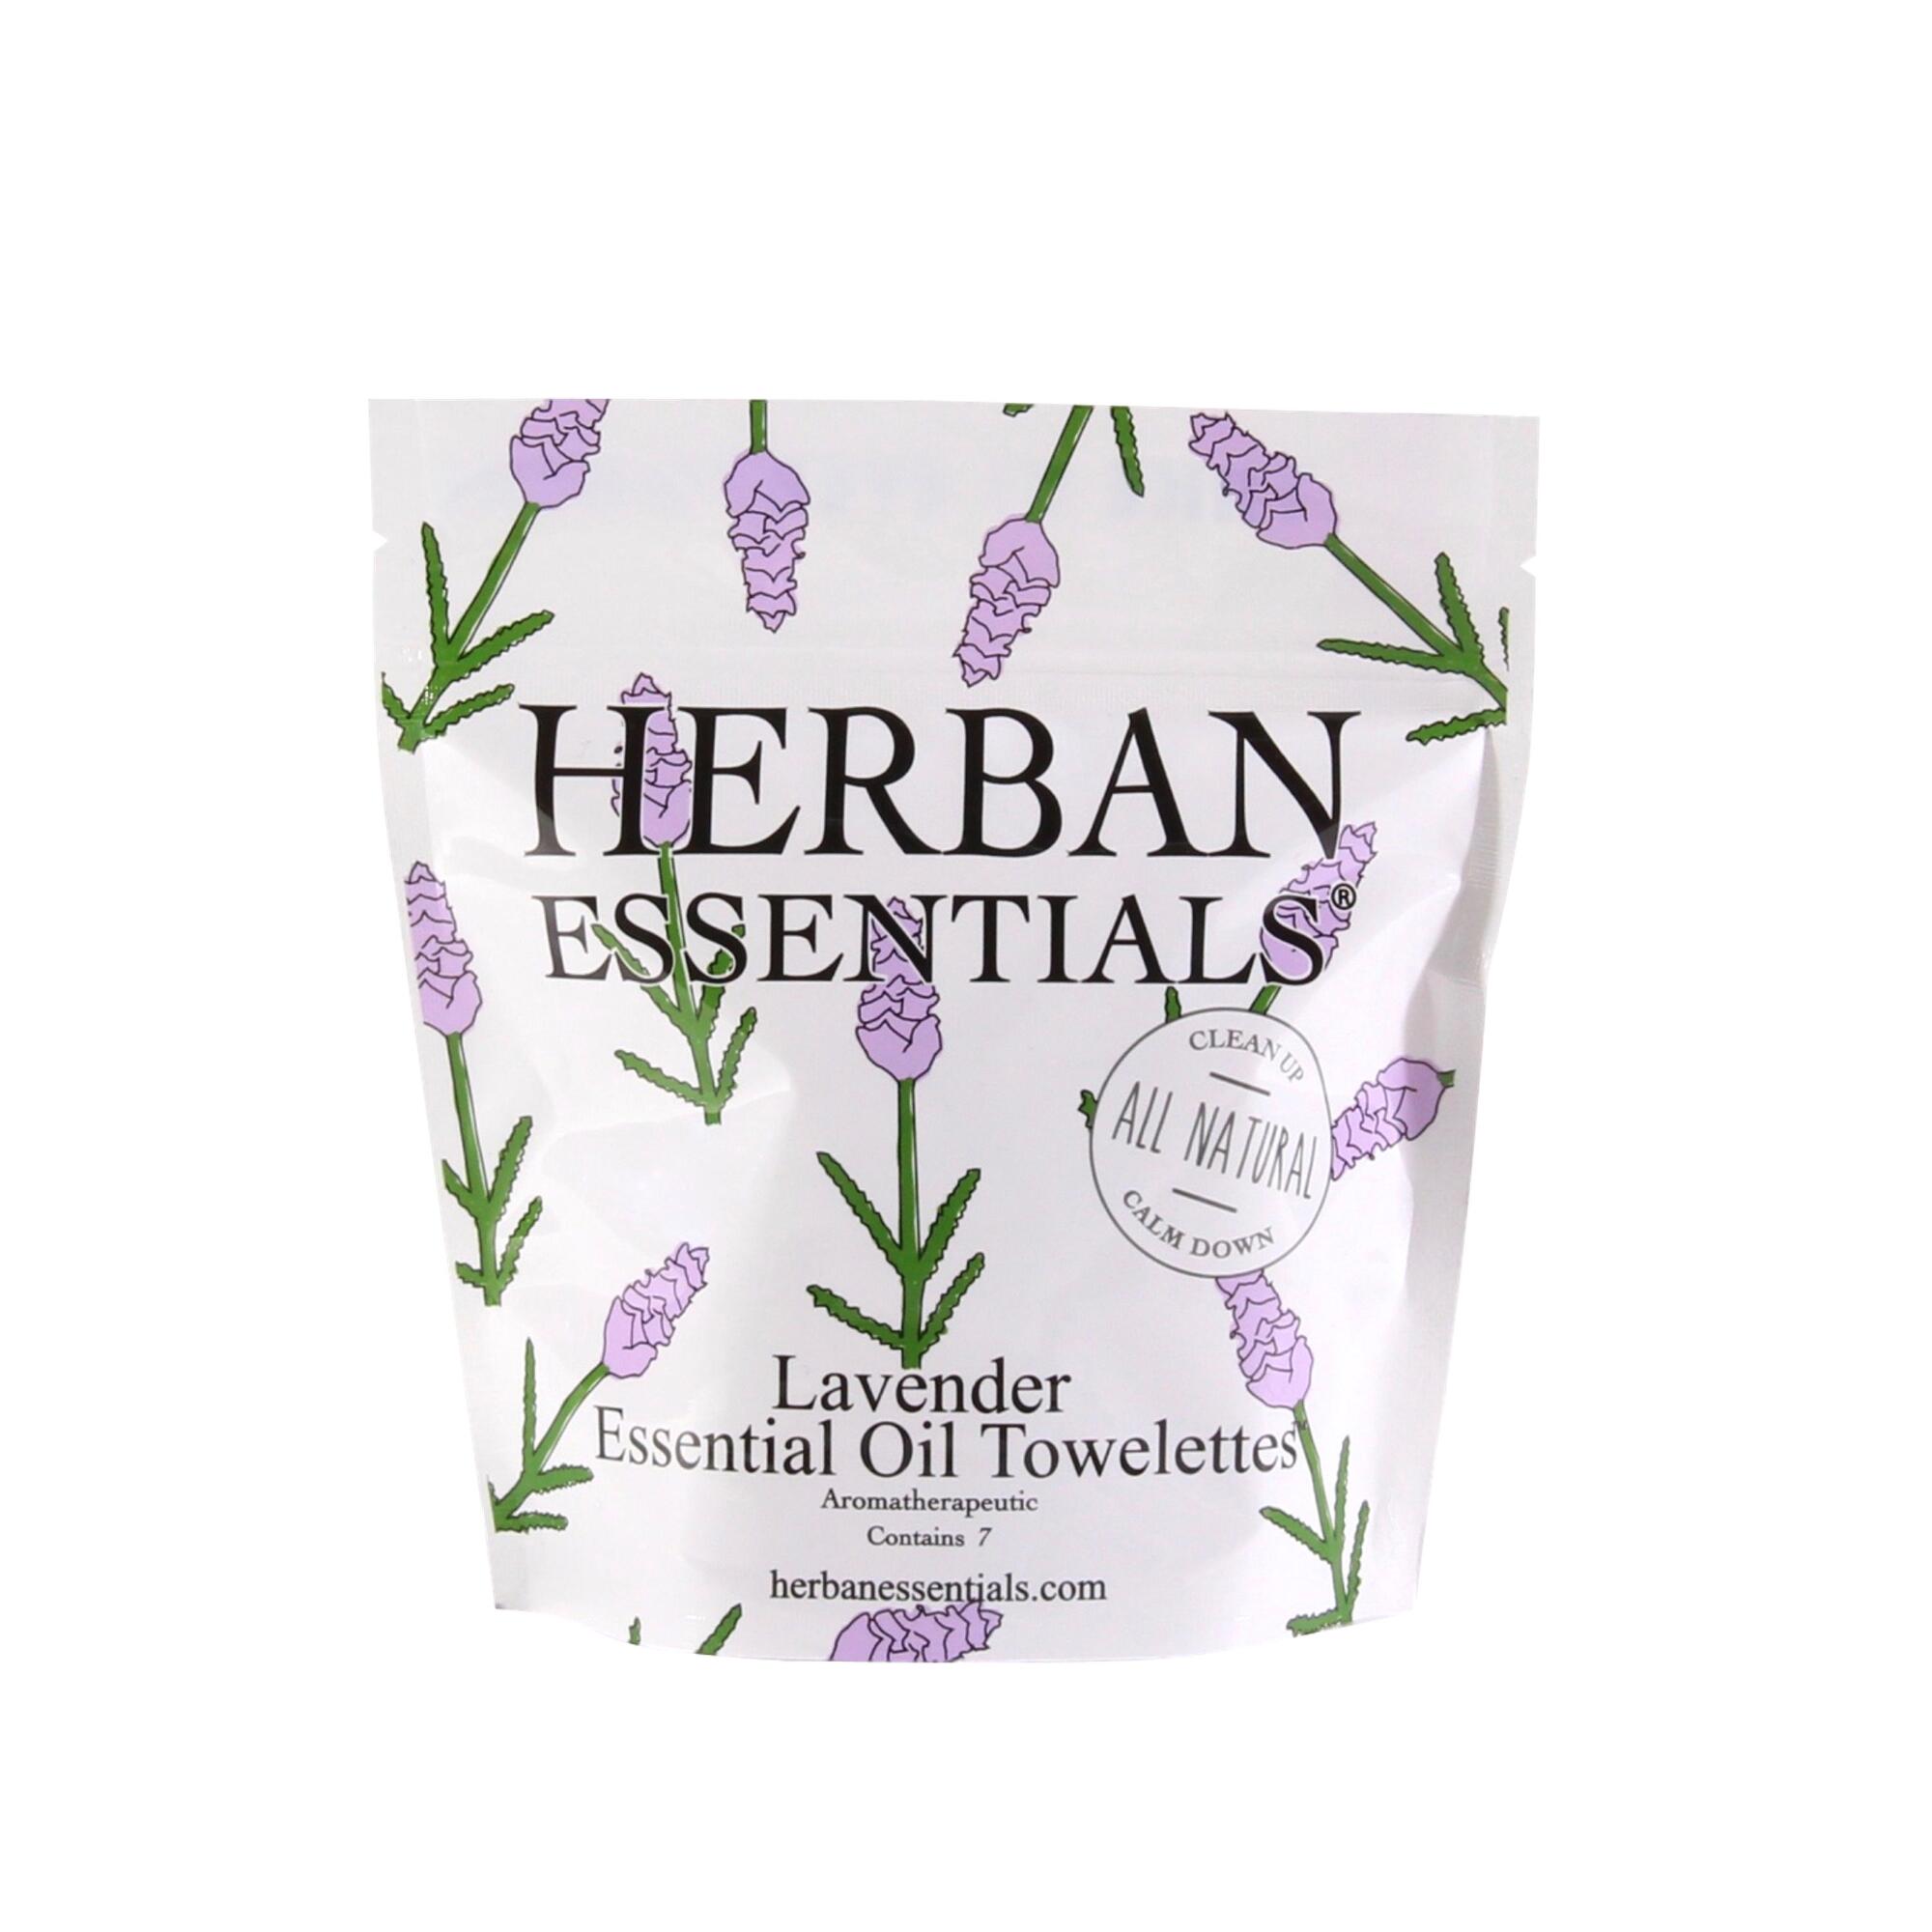 Herban Essentials Lavender Essential Oil Wipes 7 Count by World Market